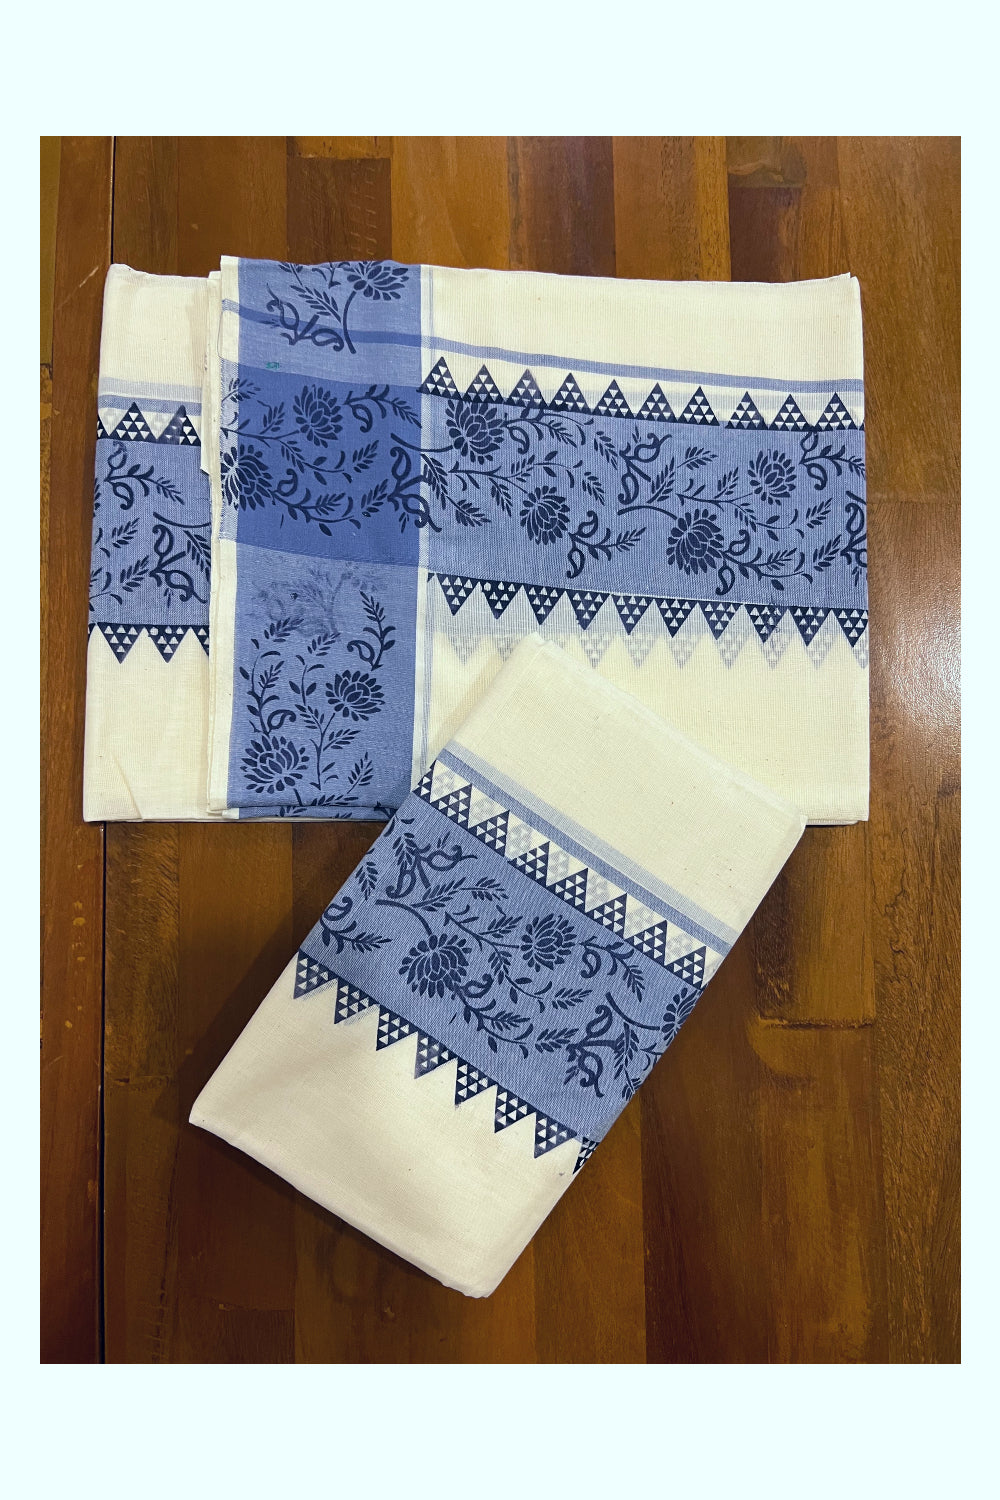 Kerala Cotton Set Mundu (Mundum Neriyathum) with Blue Floral Temple Block Prints on Border